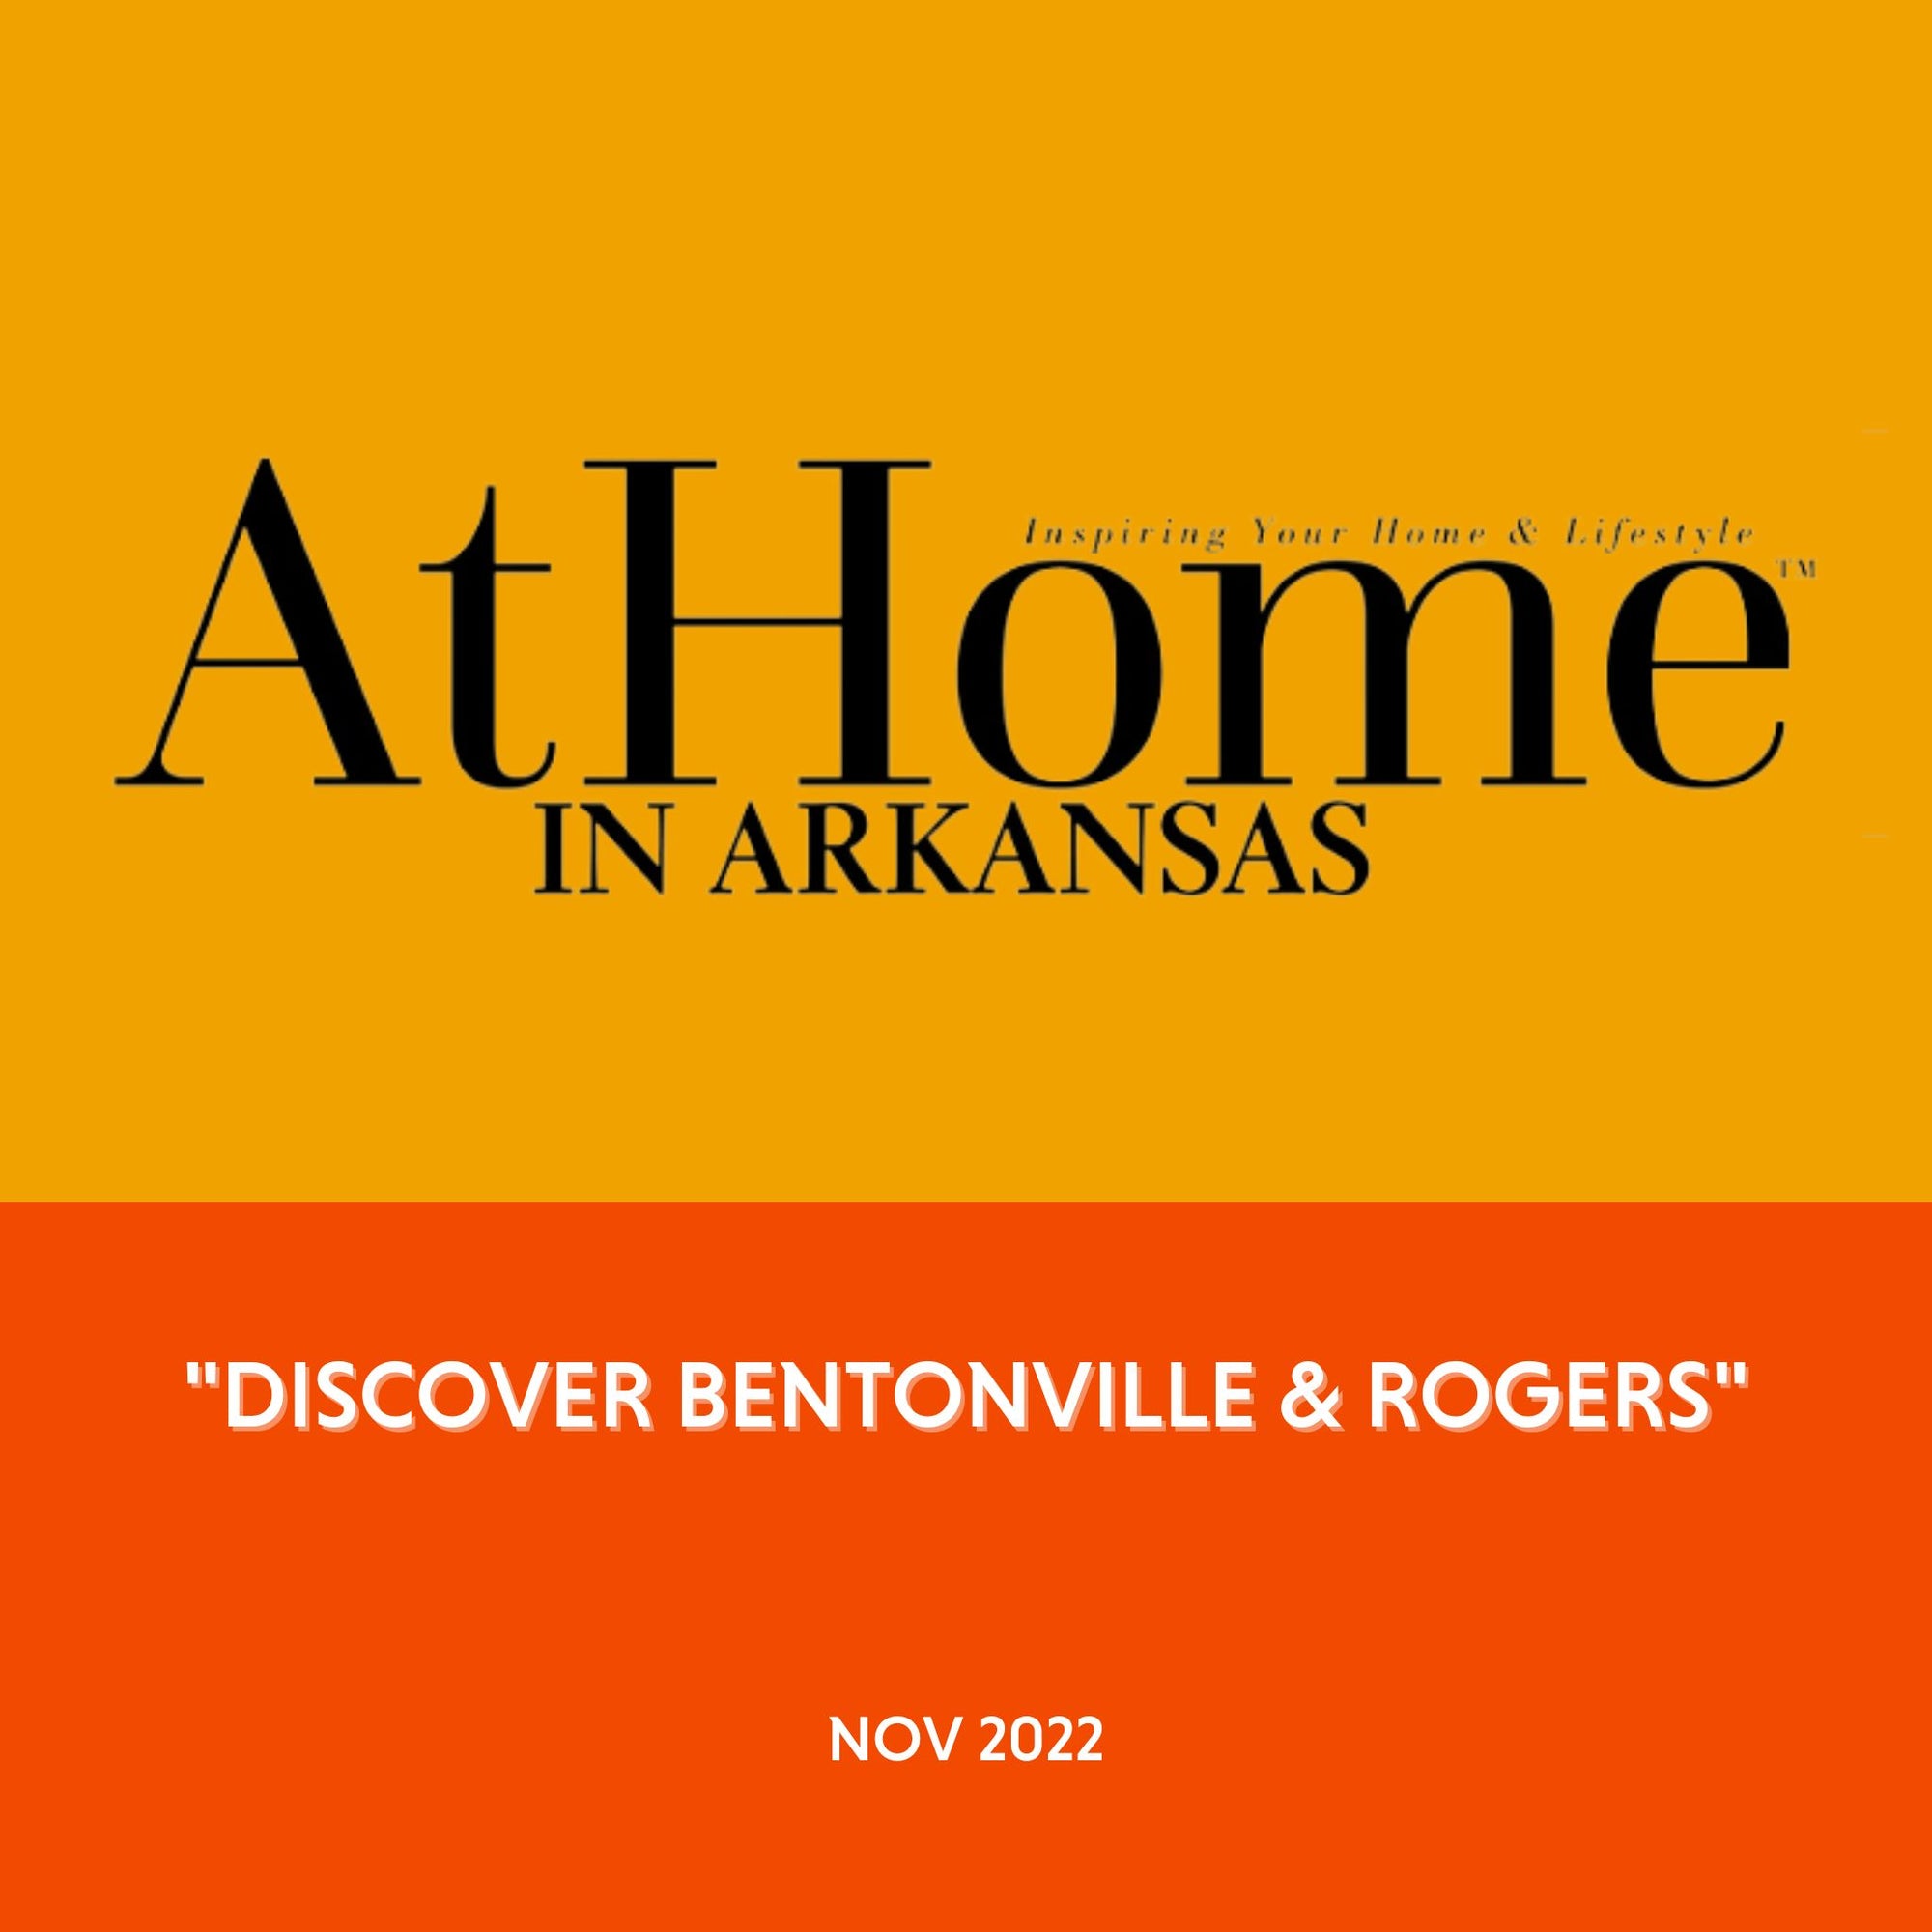 At Home in Arkansas - "DISCOVER BENTONVILLE & ROGERS" - Nov 2022